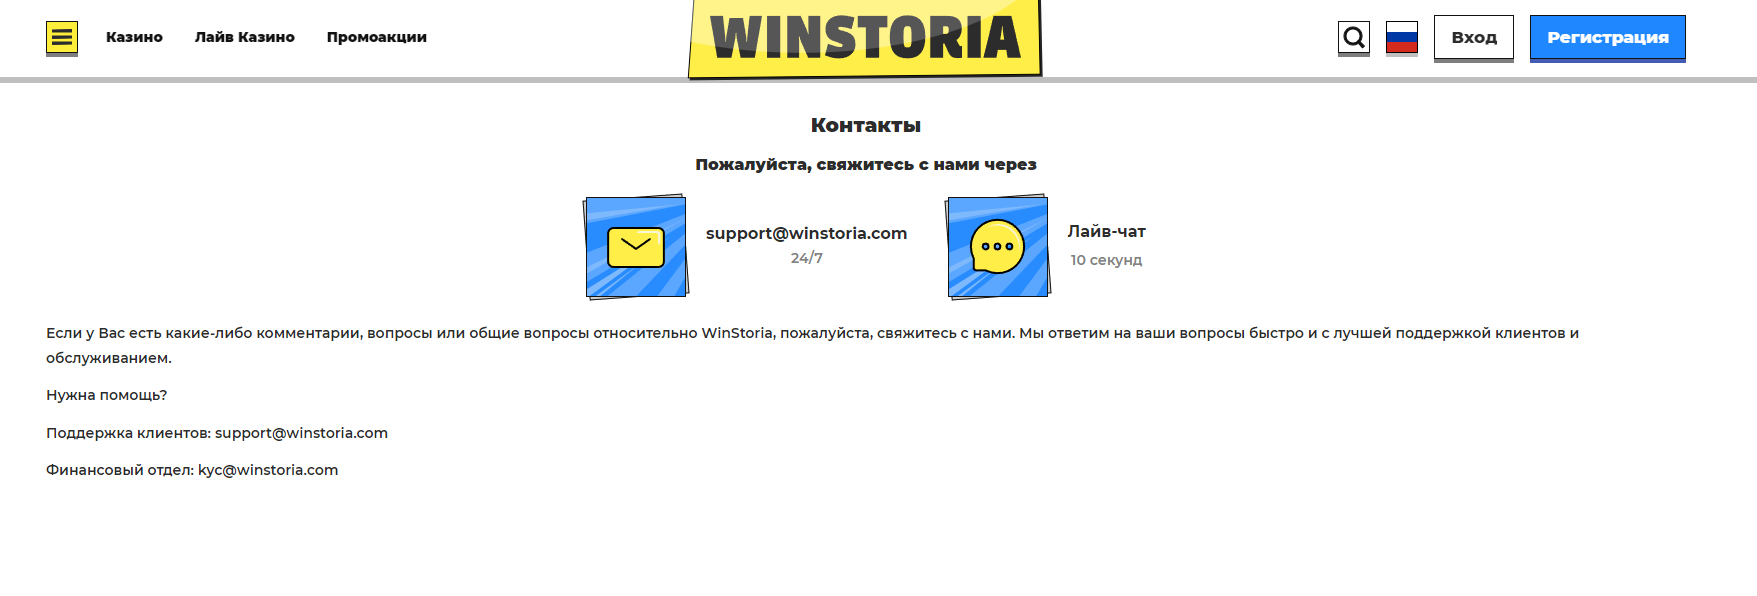 Winstoria3.png